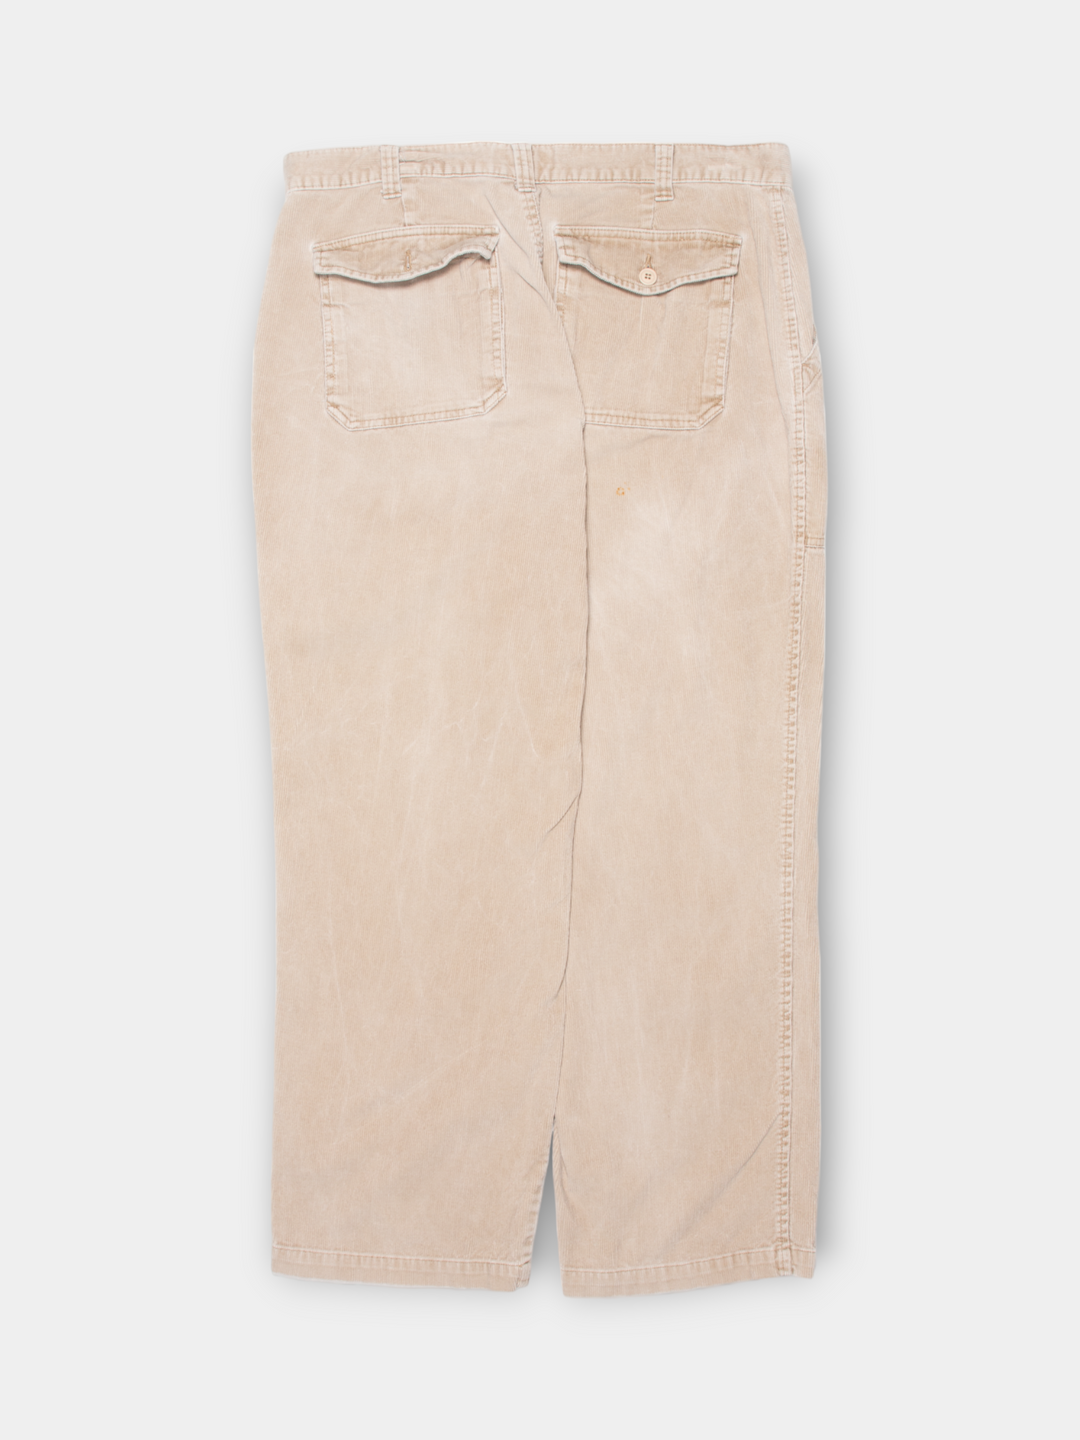 90s St Johns Bay Corduroy Pants (38")